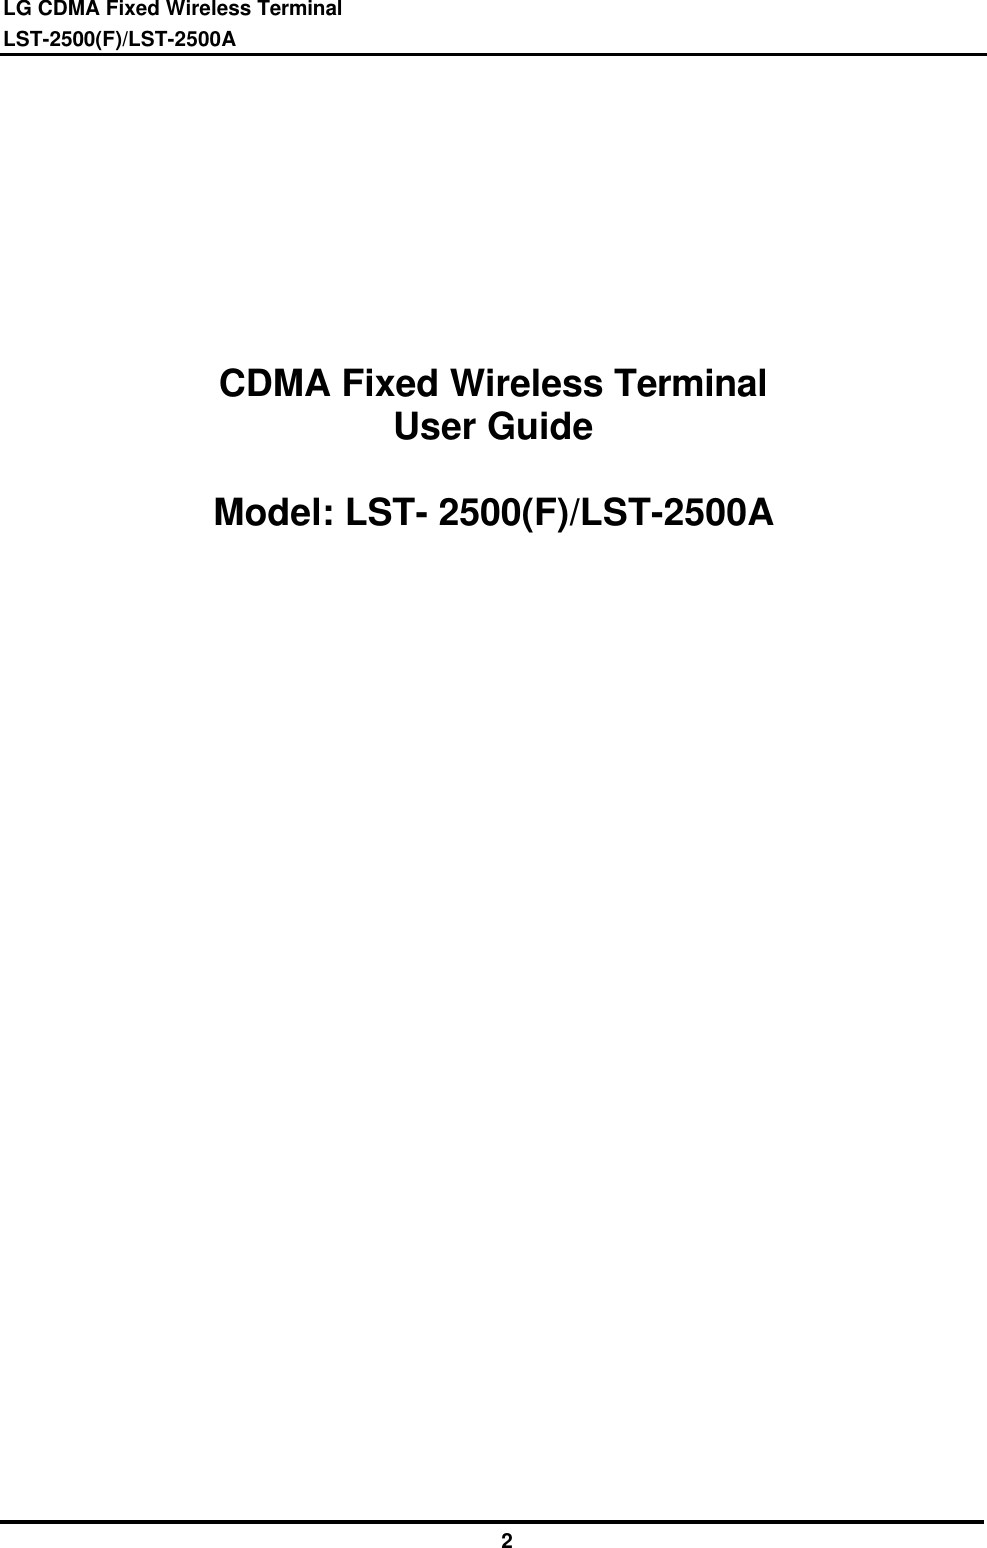 LG CDMA Fixed Wireless TerminalLST-2500(F)/LST-2500A2CDMA Fixed Wireless TerminalUser GuideModel: LST- 2500(F)/LST-2500A